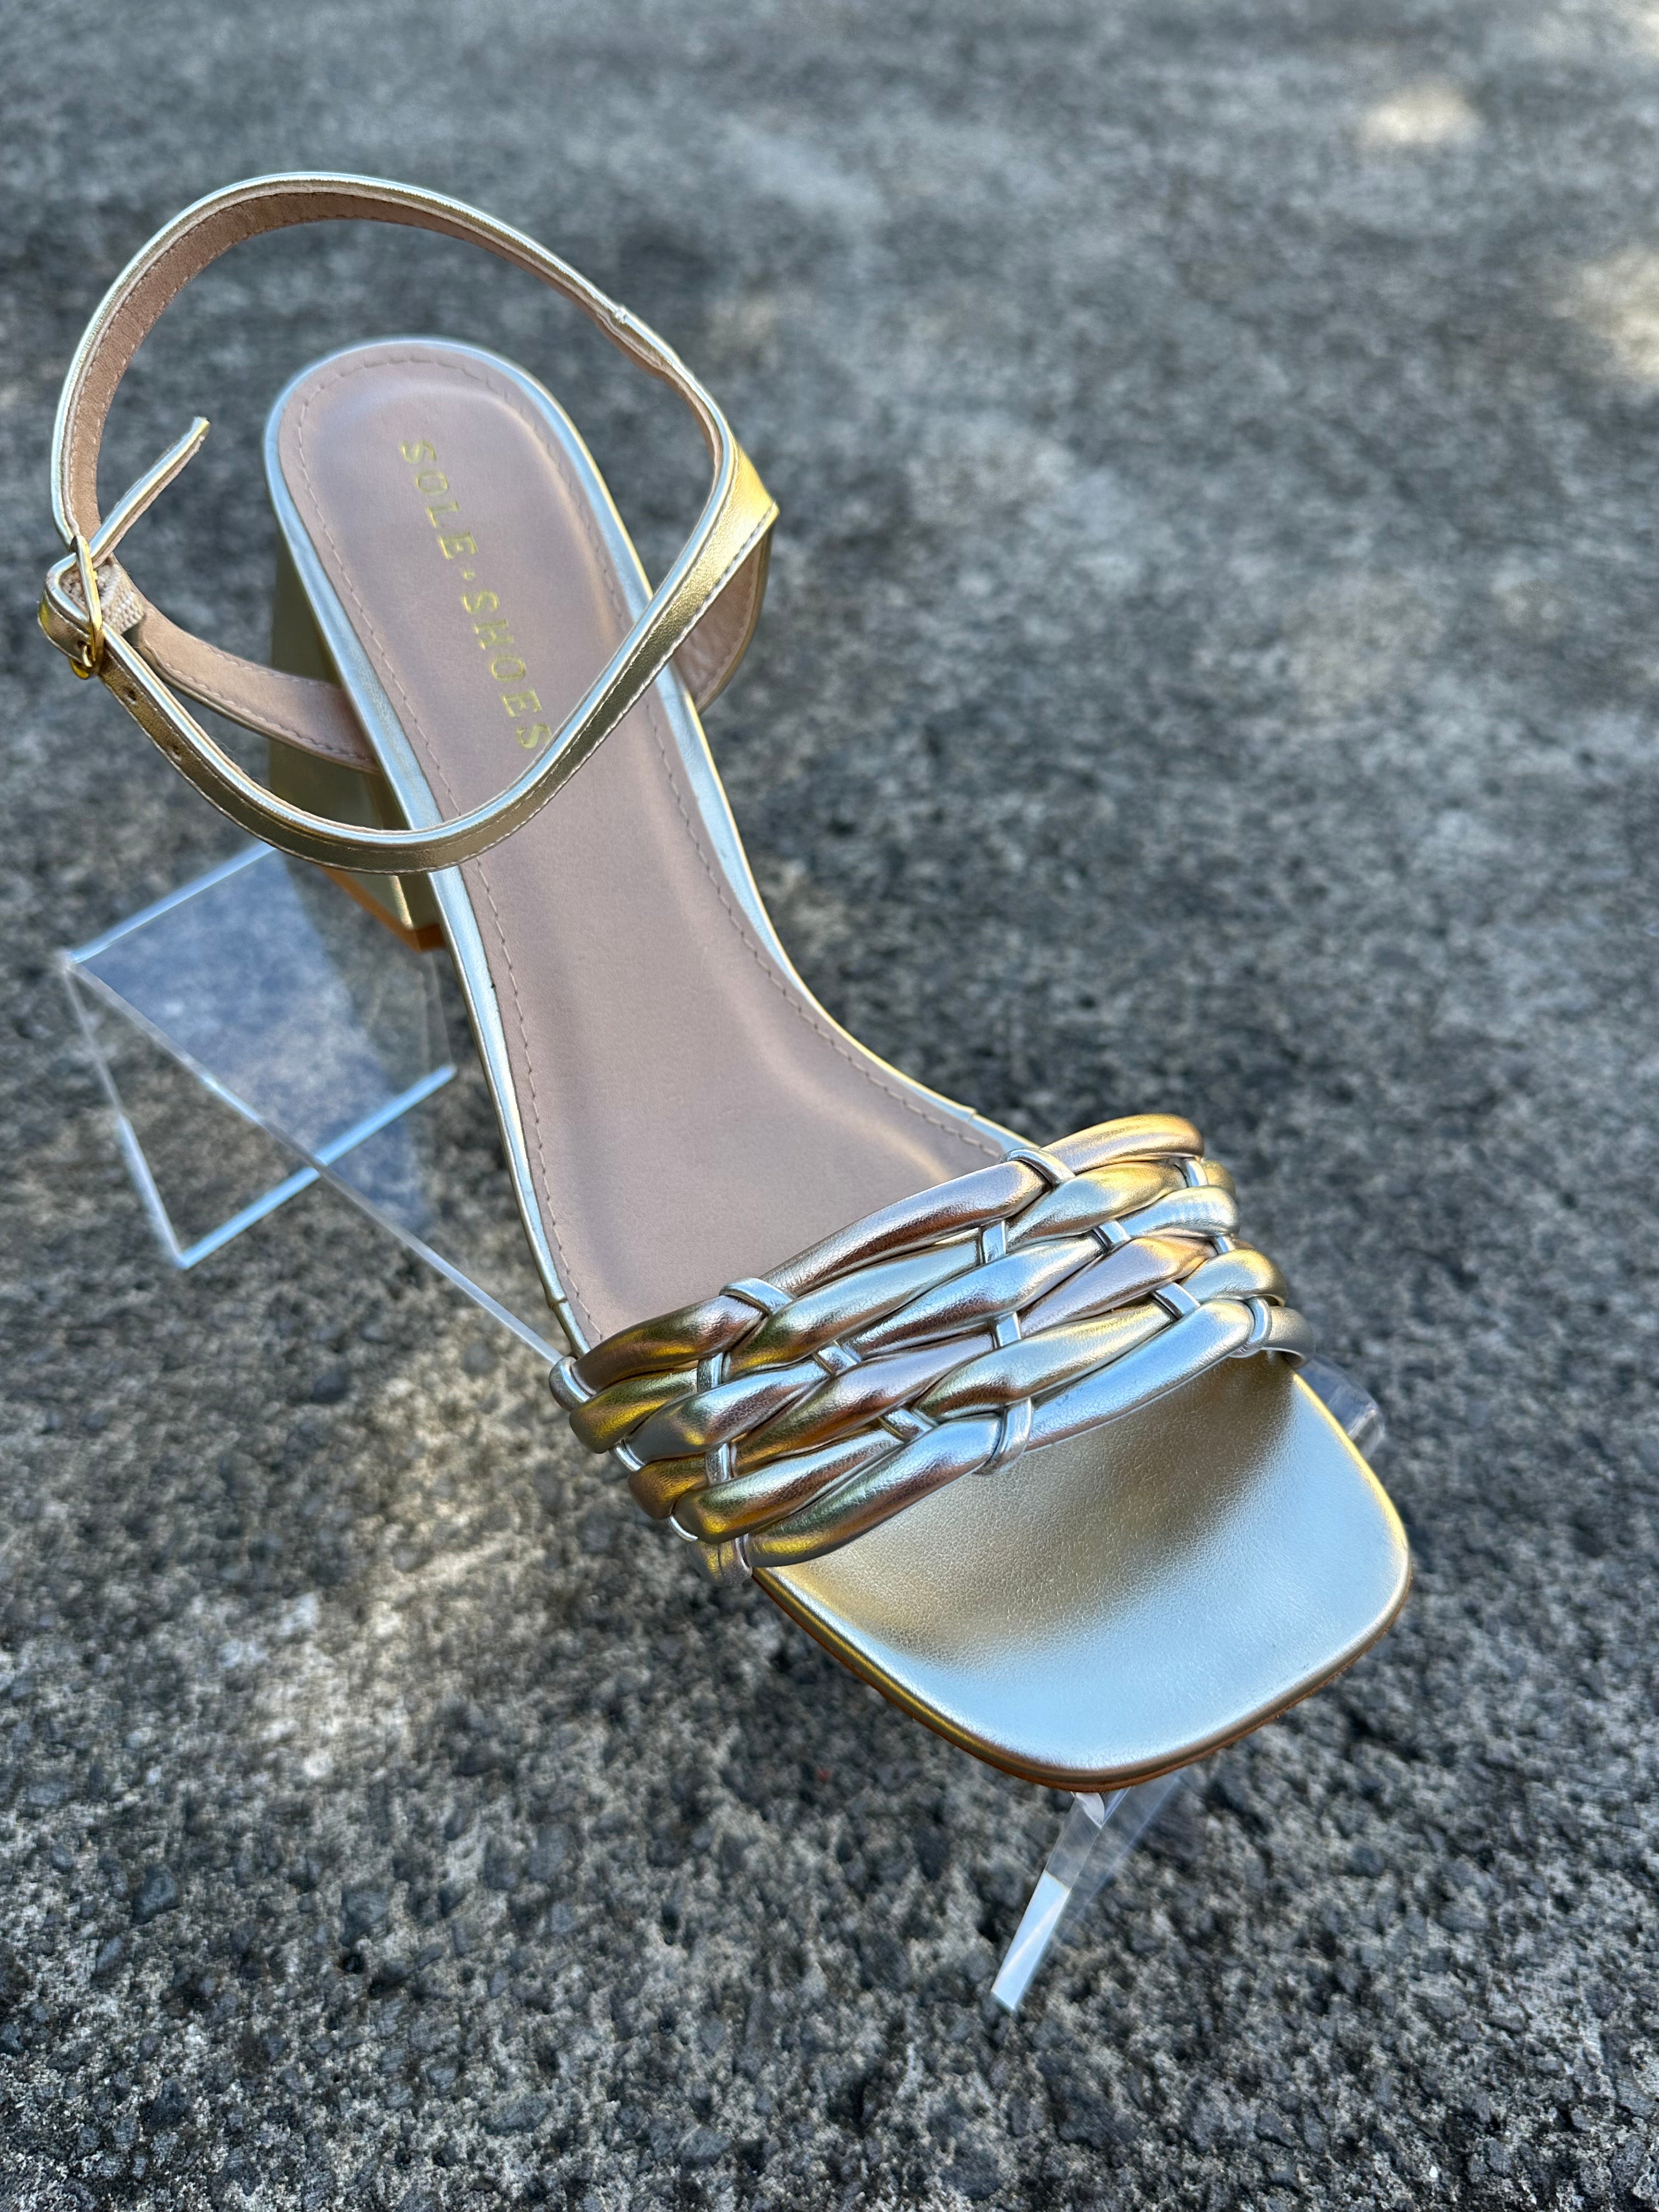 Eli Block Heel Sandal Gold Metallic Heels by Sole Shoes NZ H31B-36